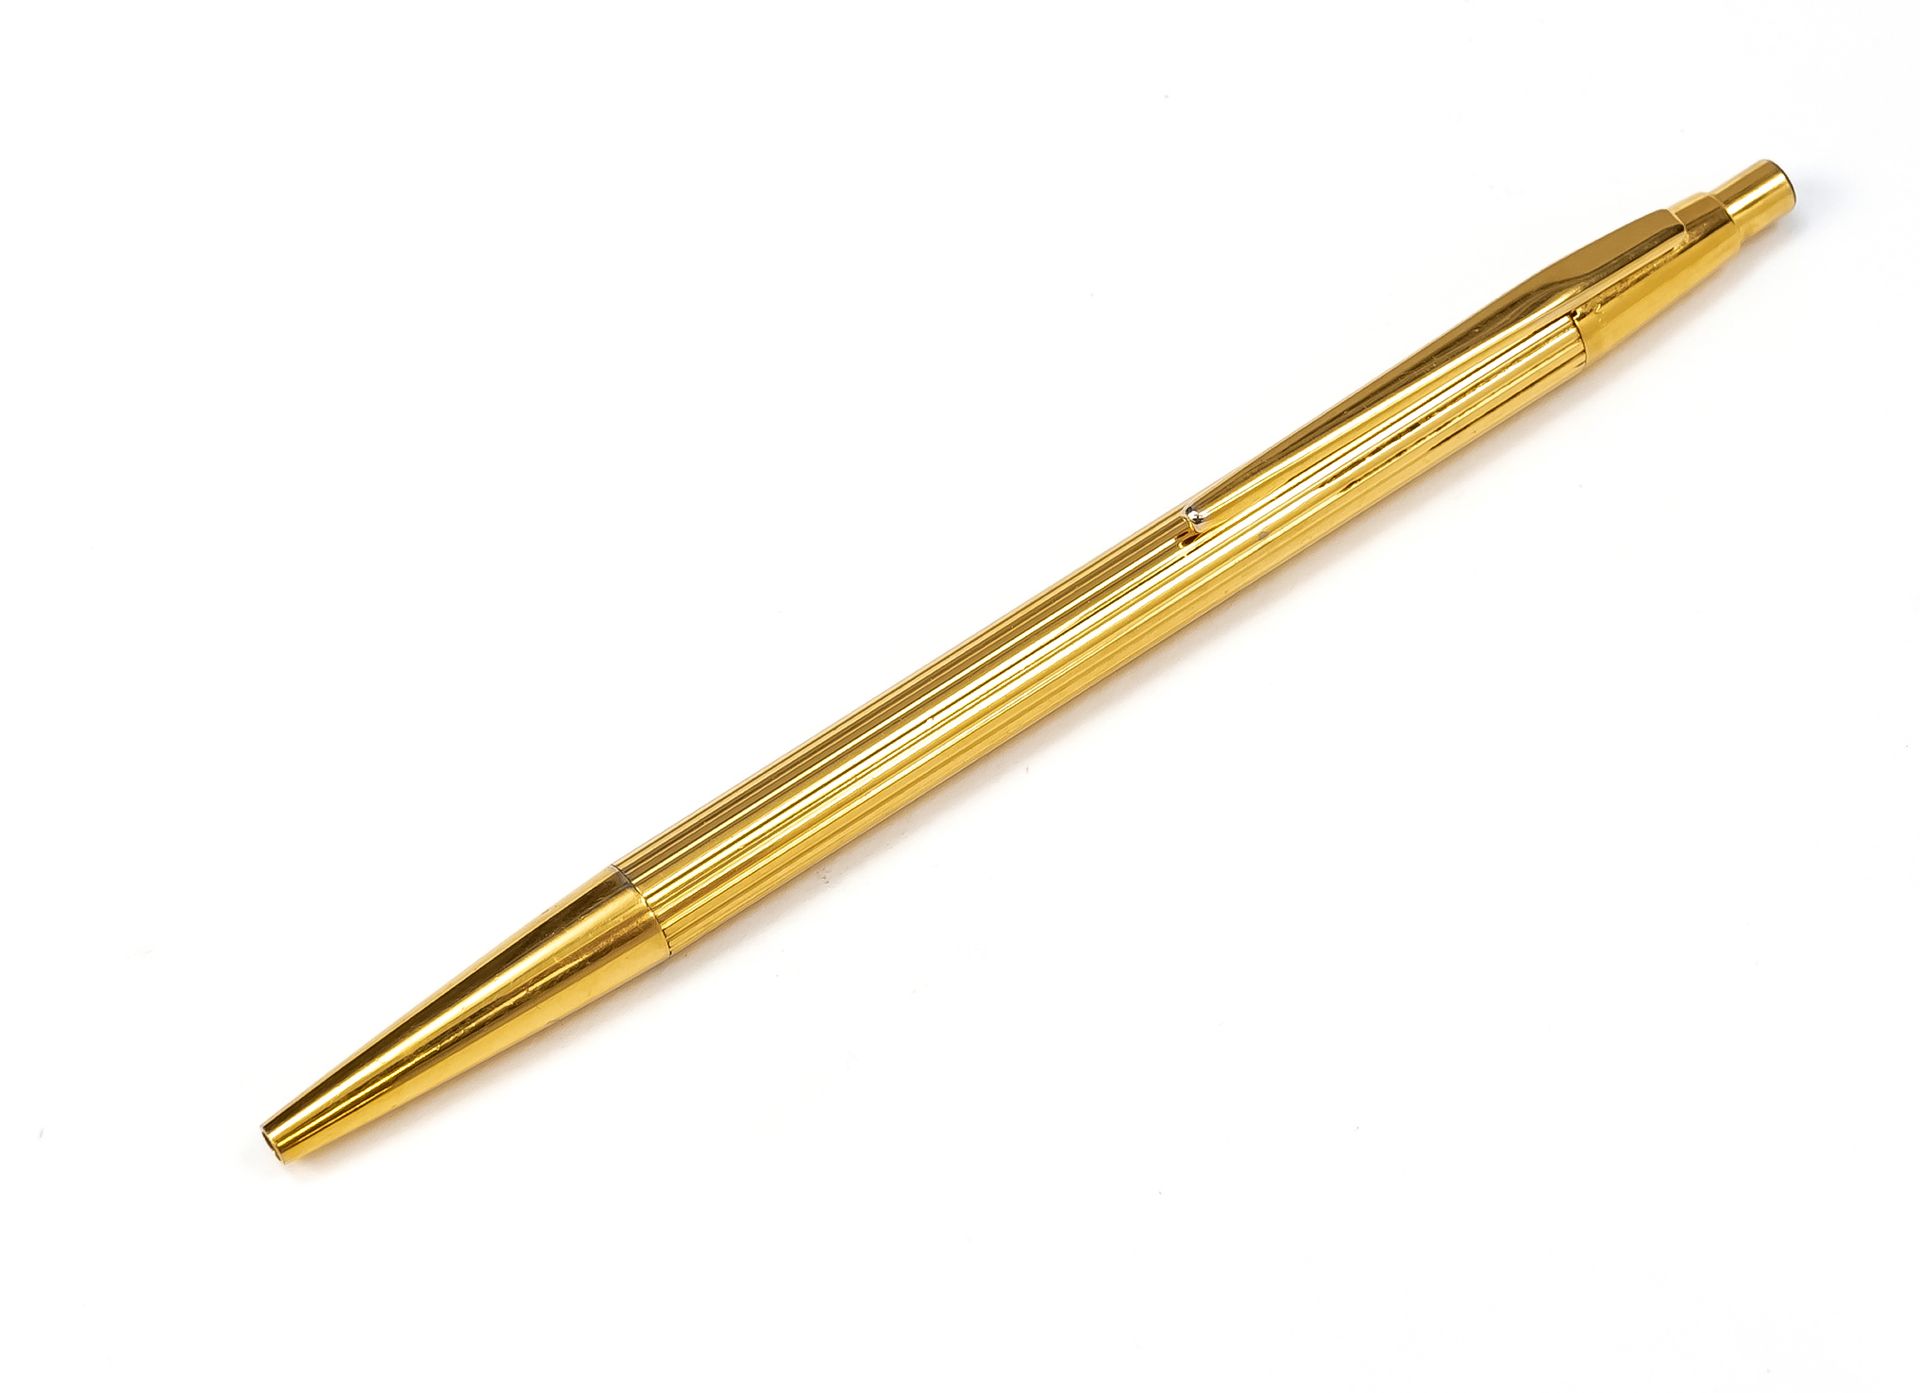 Null 万宝龙双头针，20世纪下半叶，Noblesse型号，镀金表壳，有条状雕刻，长14厘米